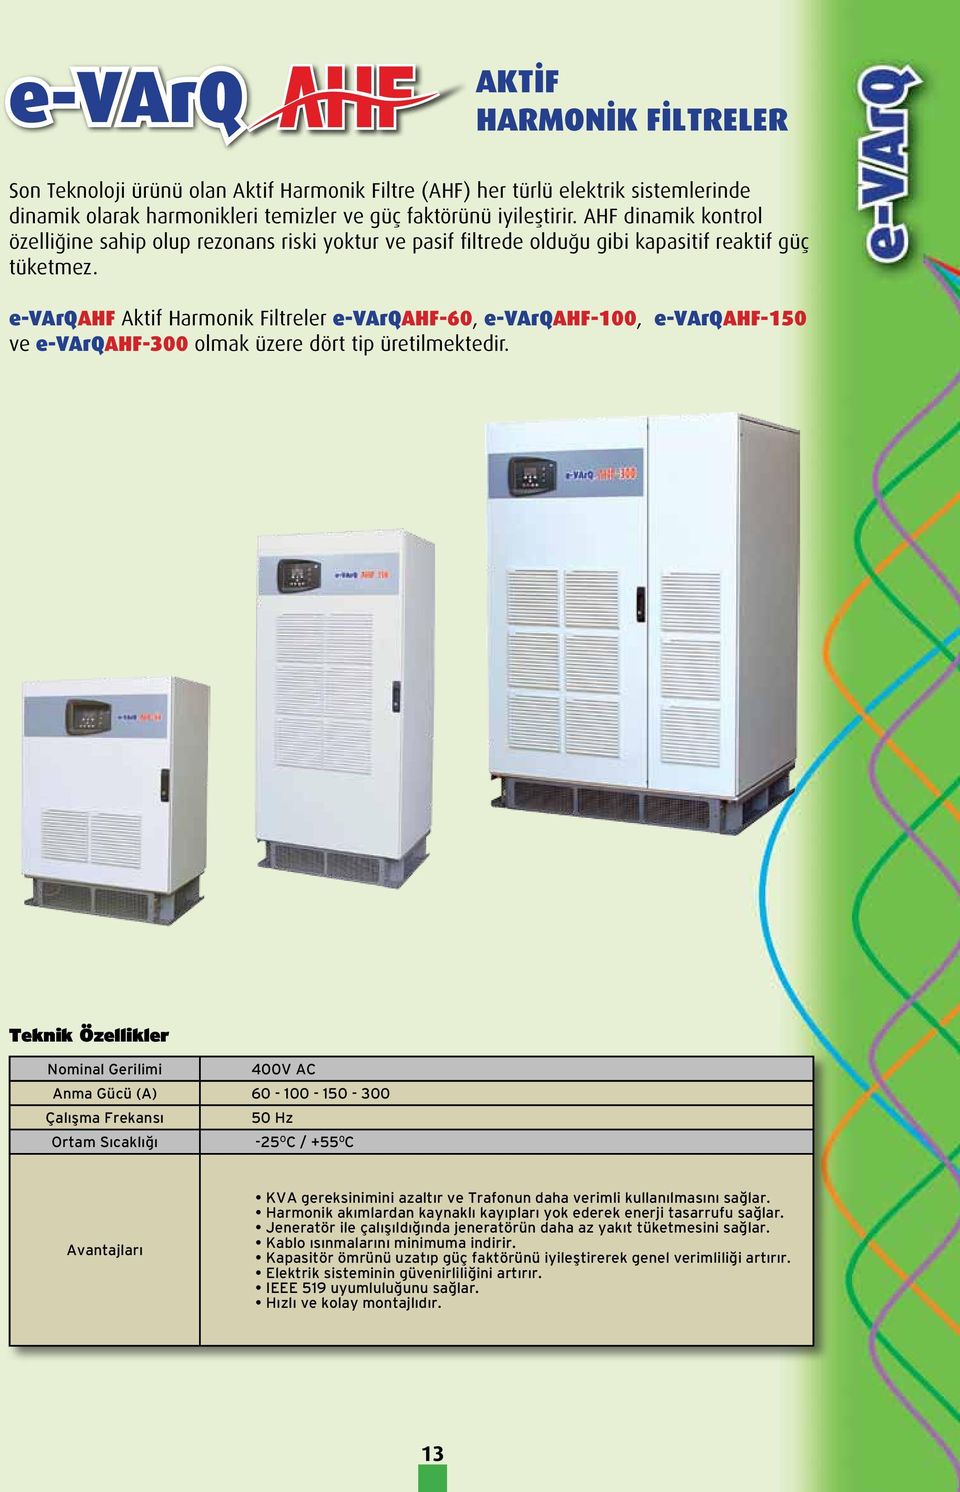 e-varqahf Aktif Harmonik Filtreler e-varqahf-60, e-varqahf-100, e-varqahf-150 ve e-varqahf-300 olmak üzere dört tip üretilmektedir.